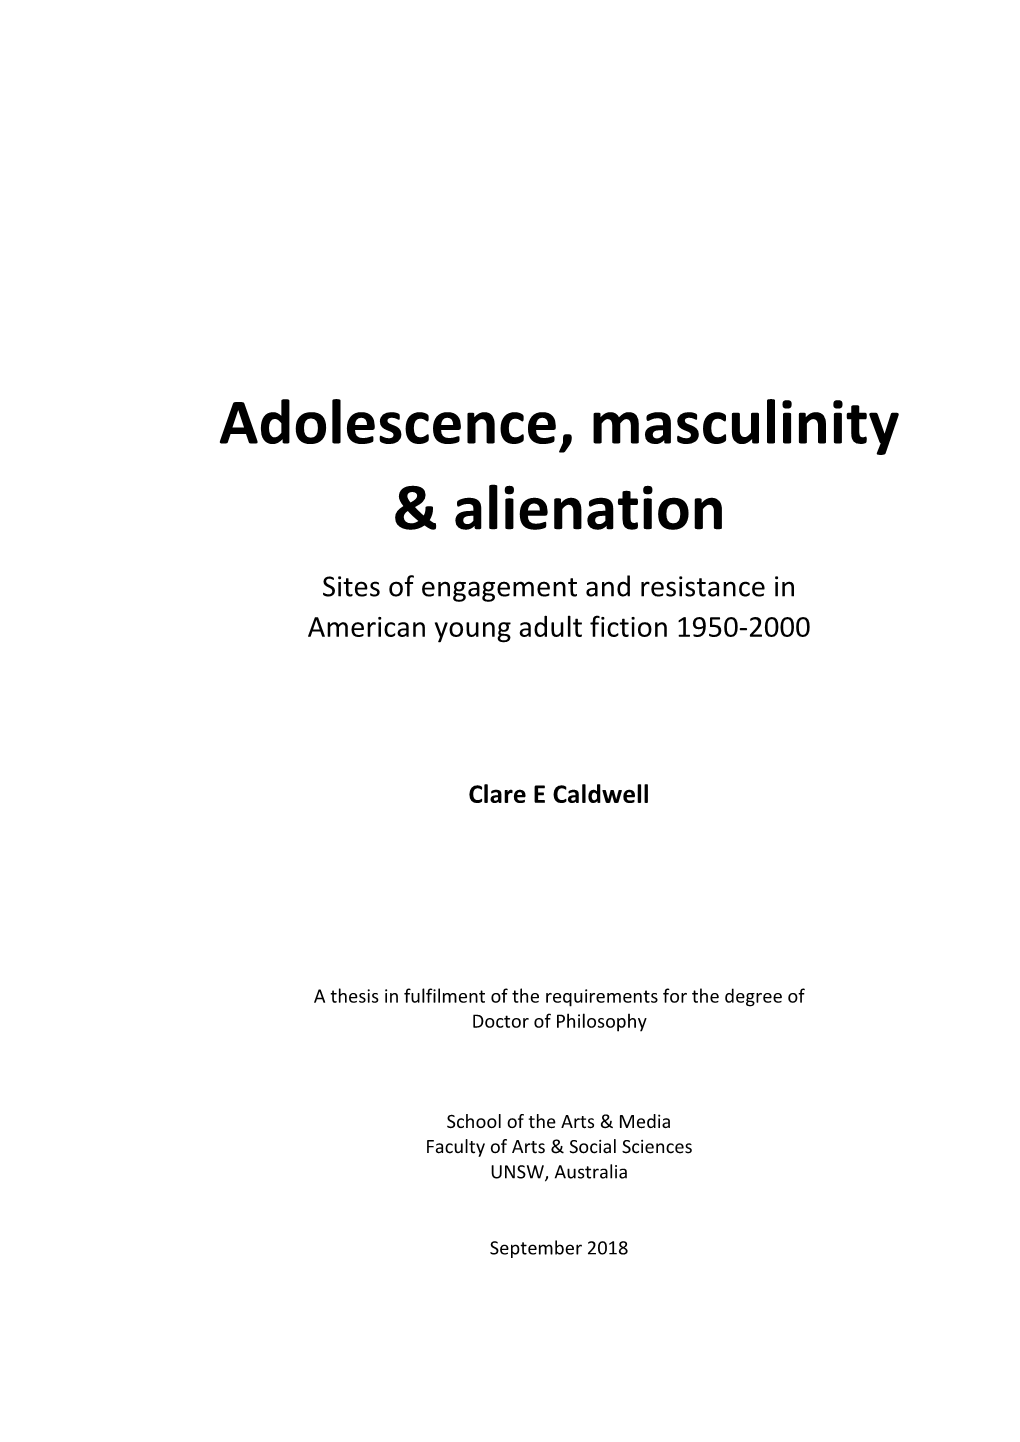 Adolescence, Masculinity & Alienation